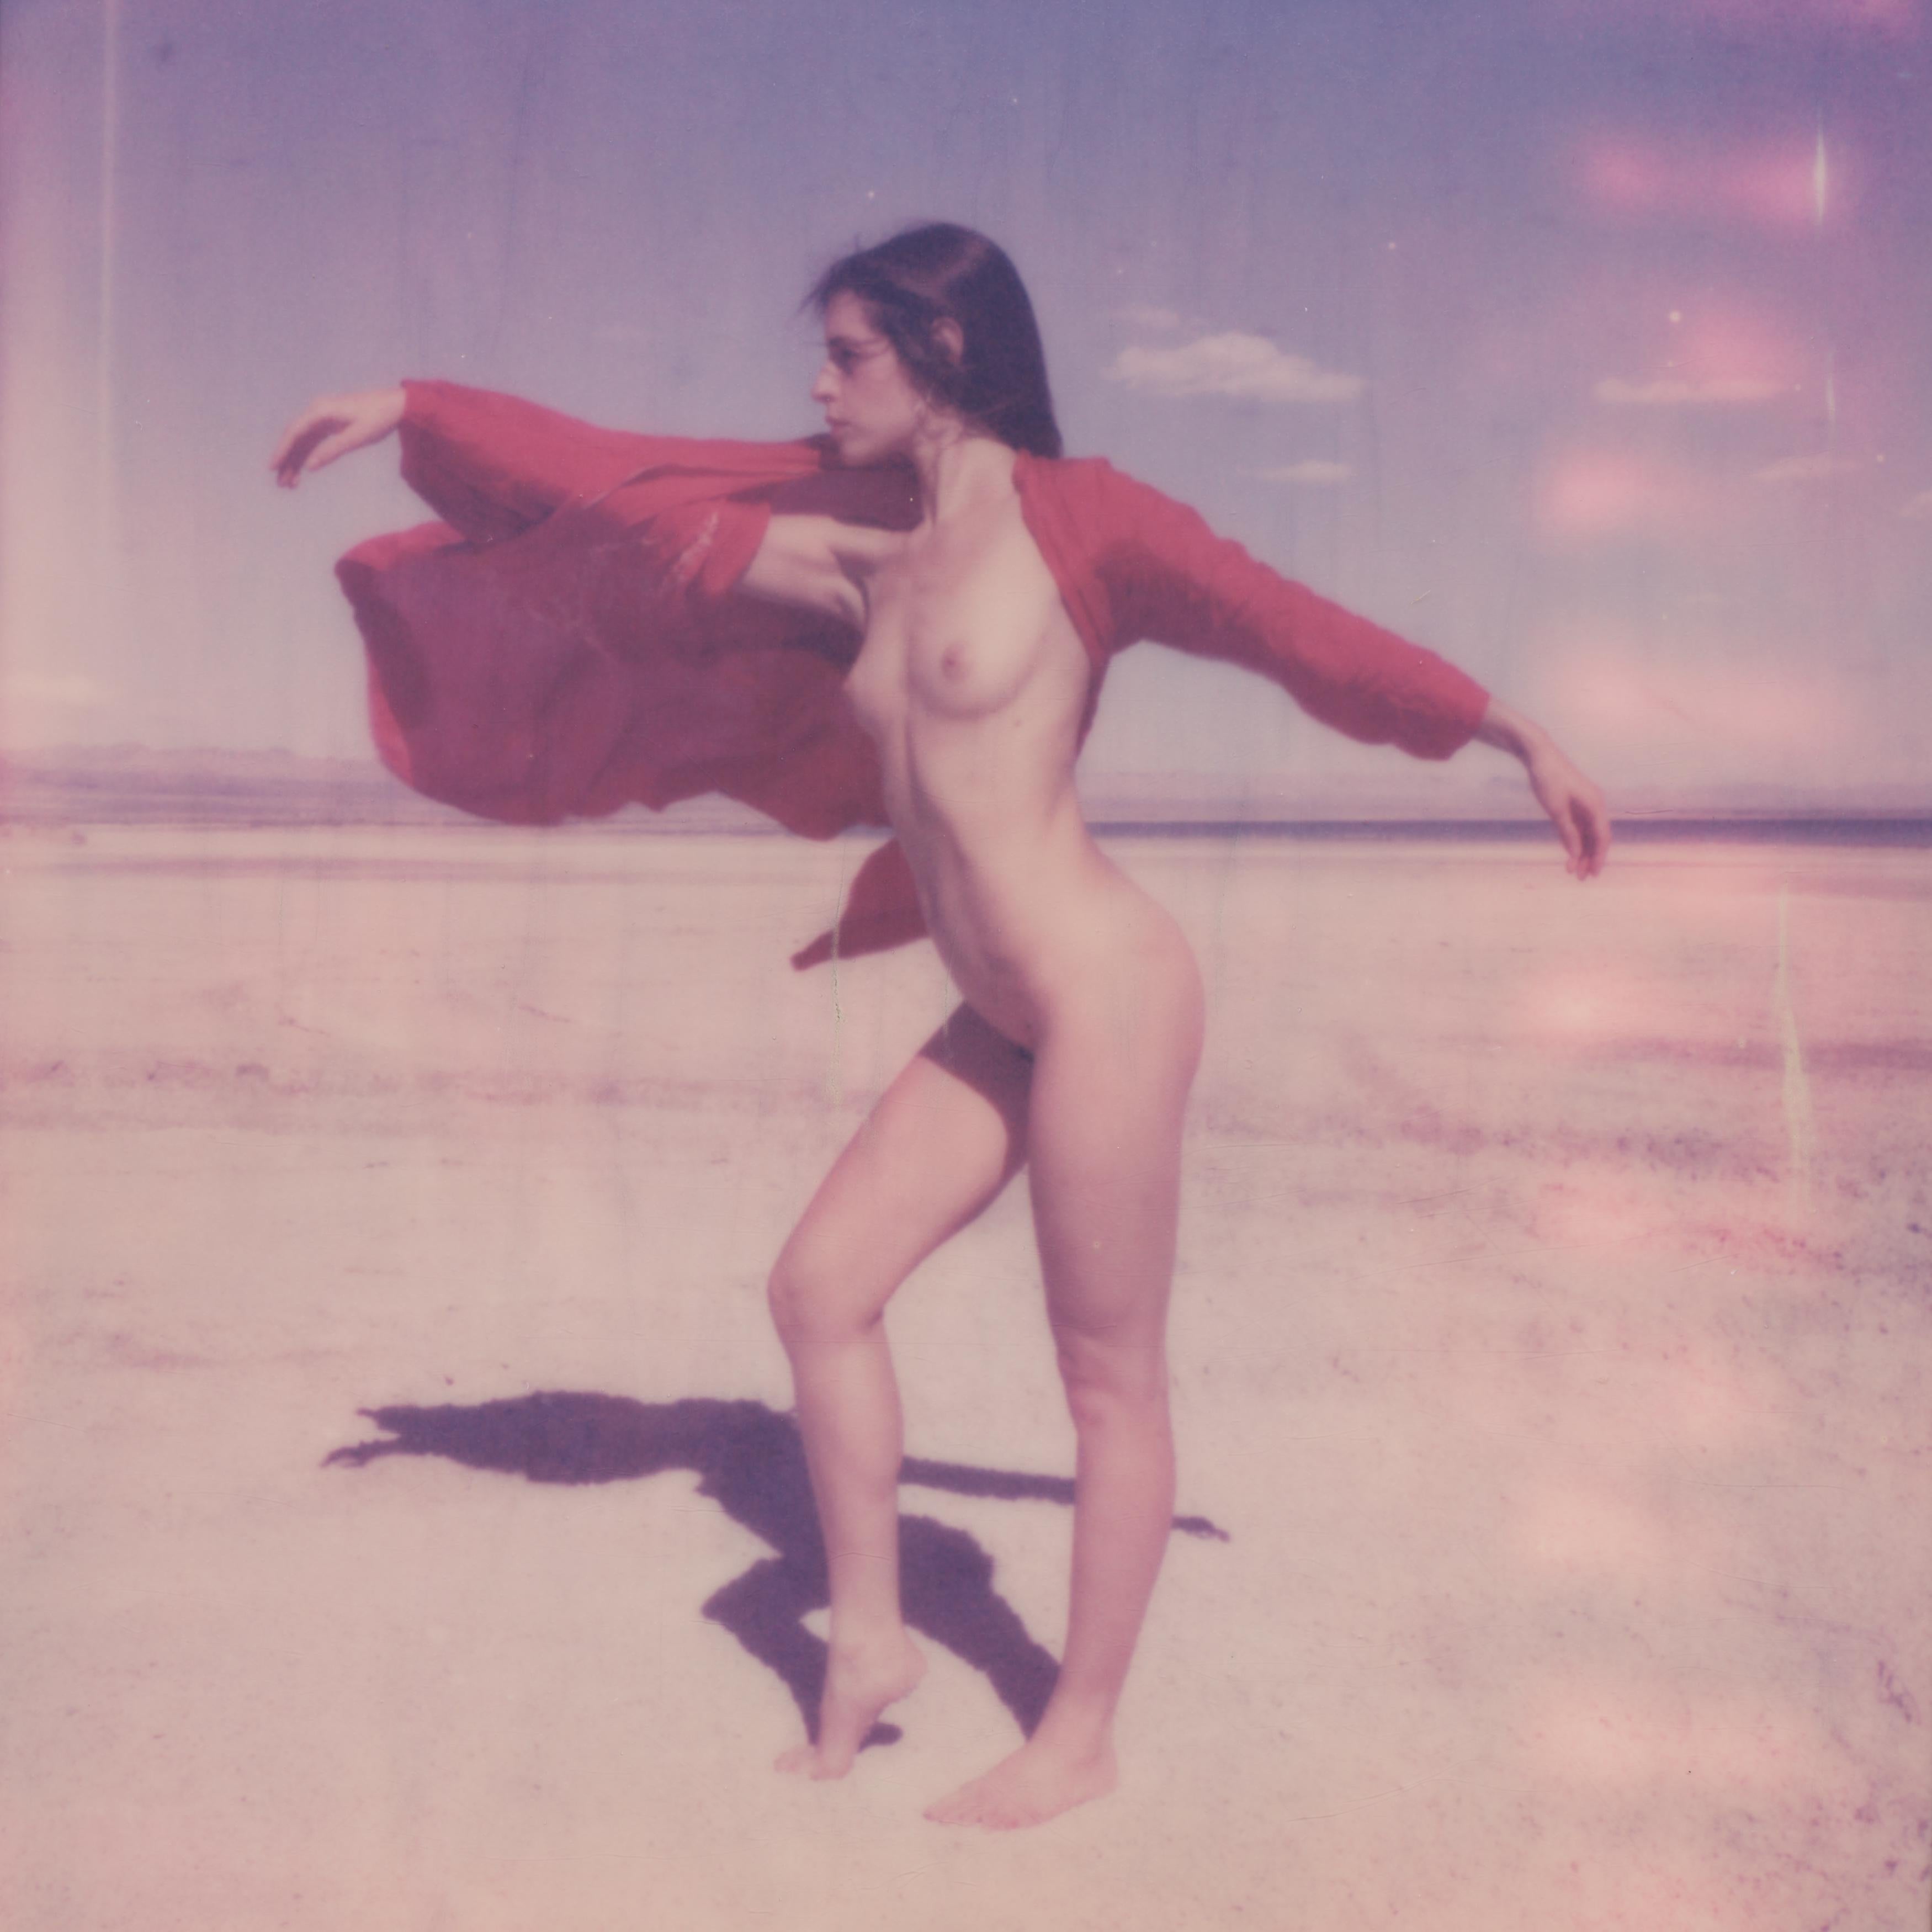 Kirsten Thys van den Audenaerde Nude Photograph - Fly - Contemporary, Polaroid, Color, Women, 21st Century